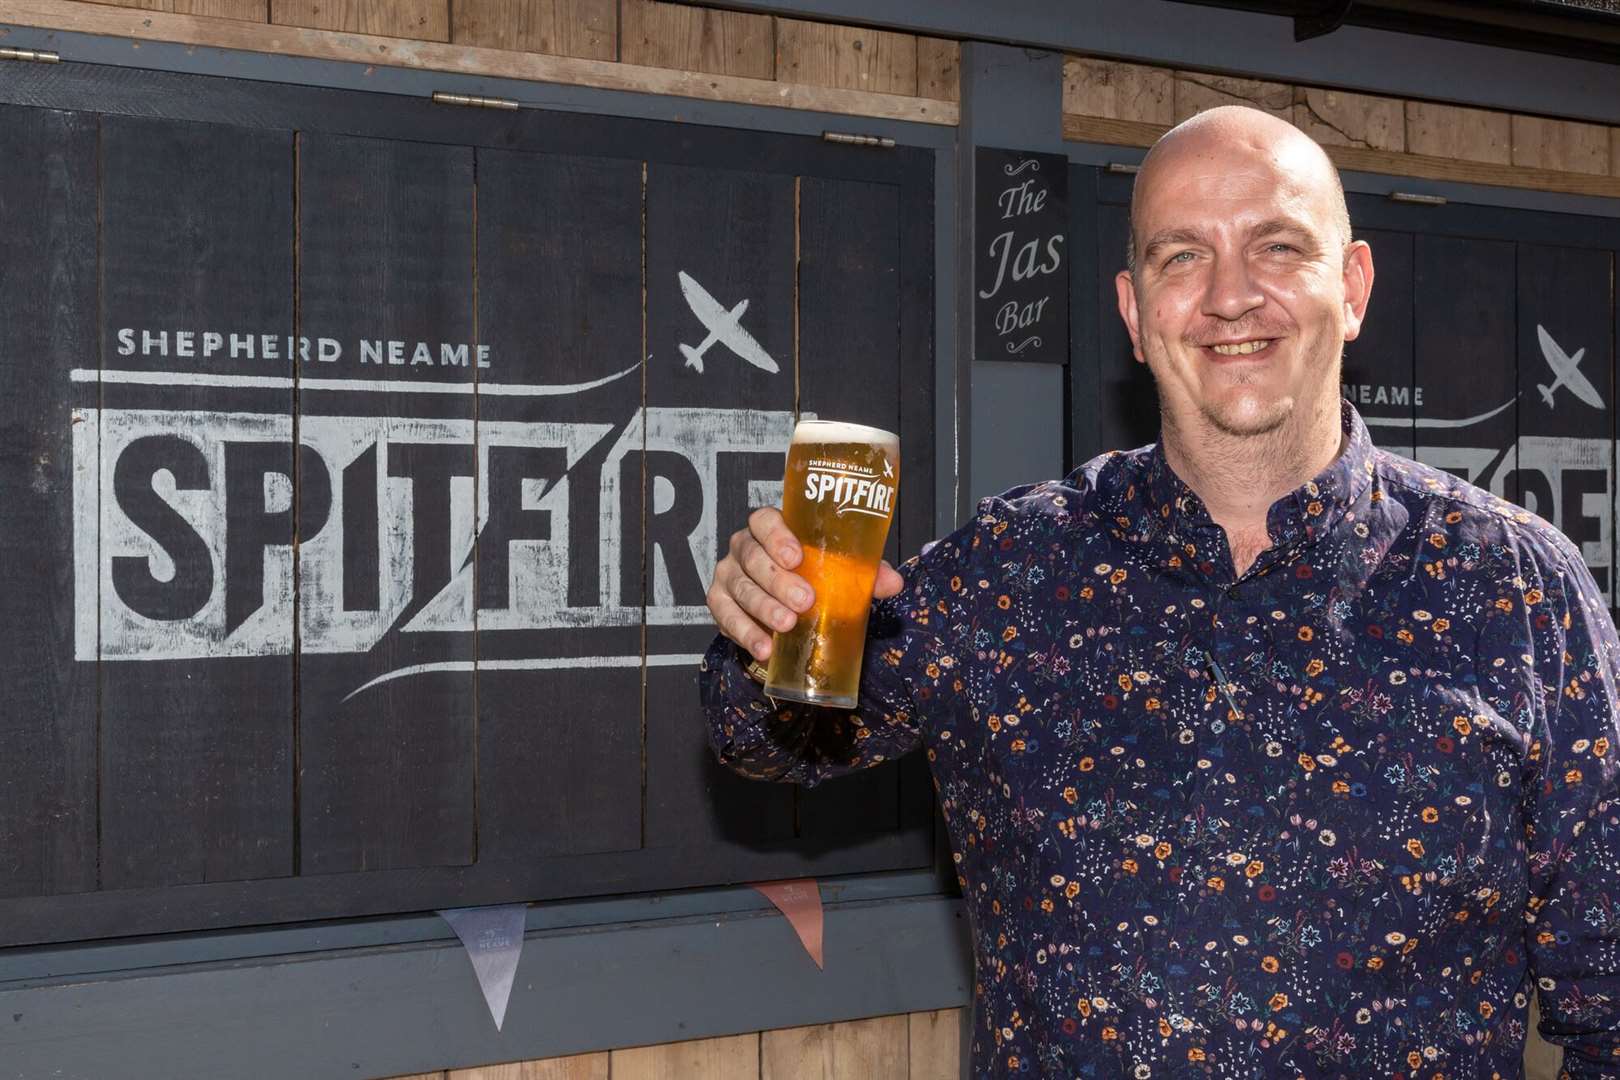 Chris Peach, manager of The Spitfire pub